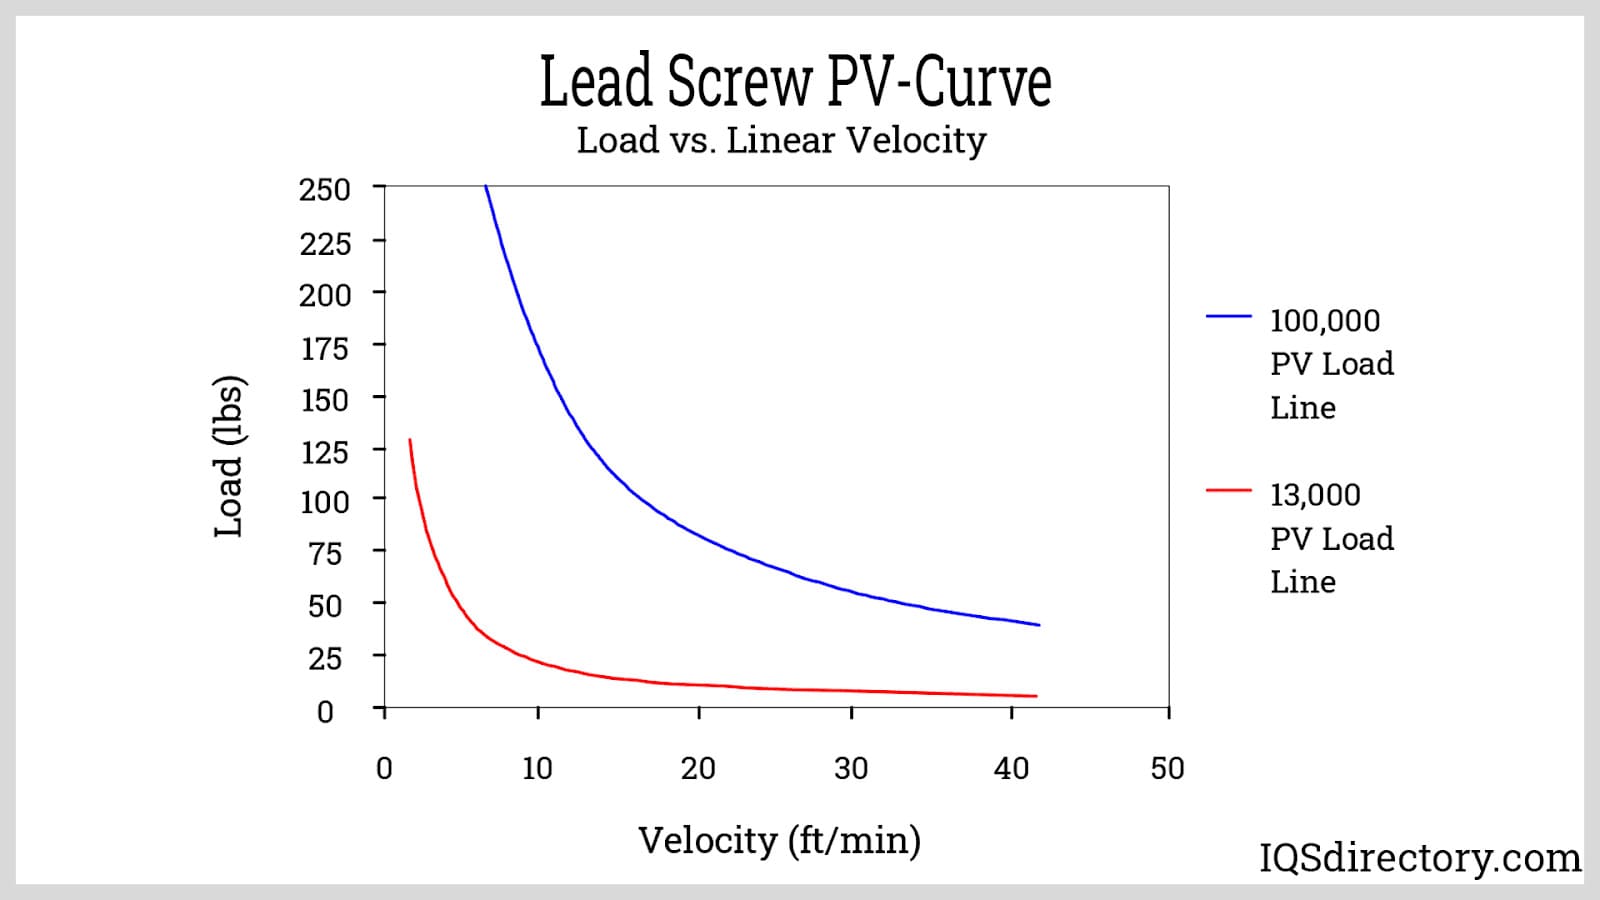 Lead Screw PV-Curve